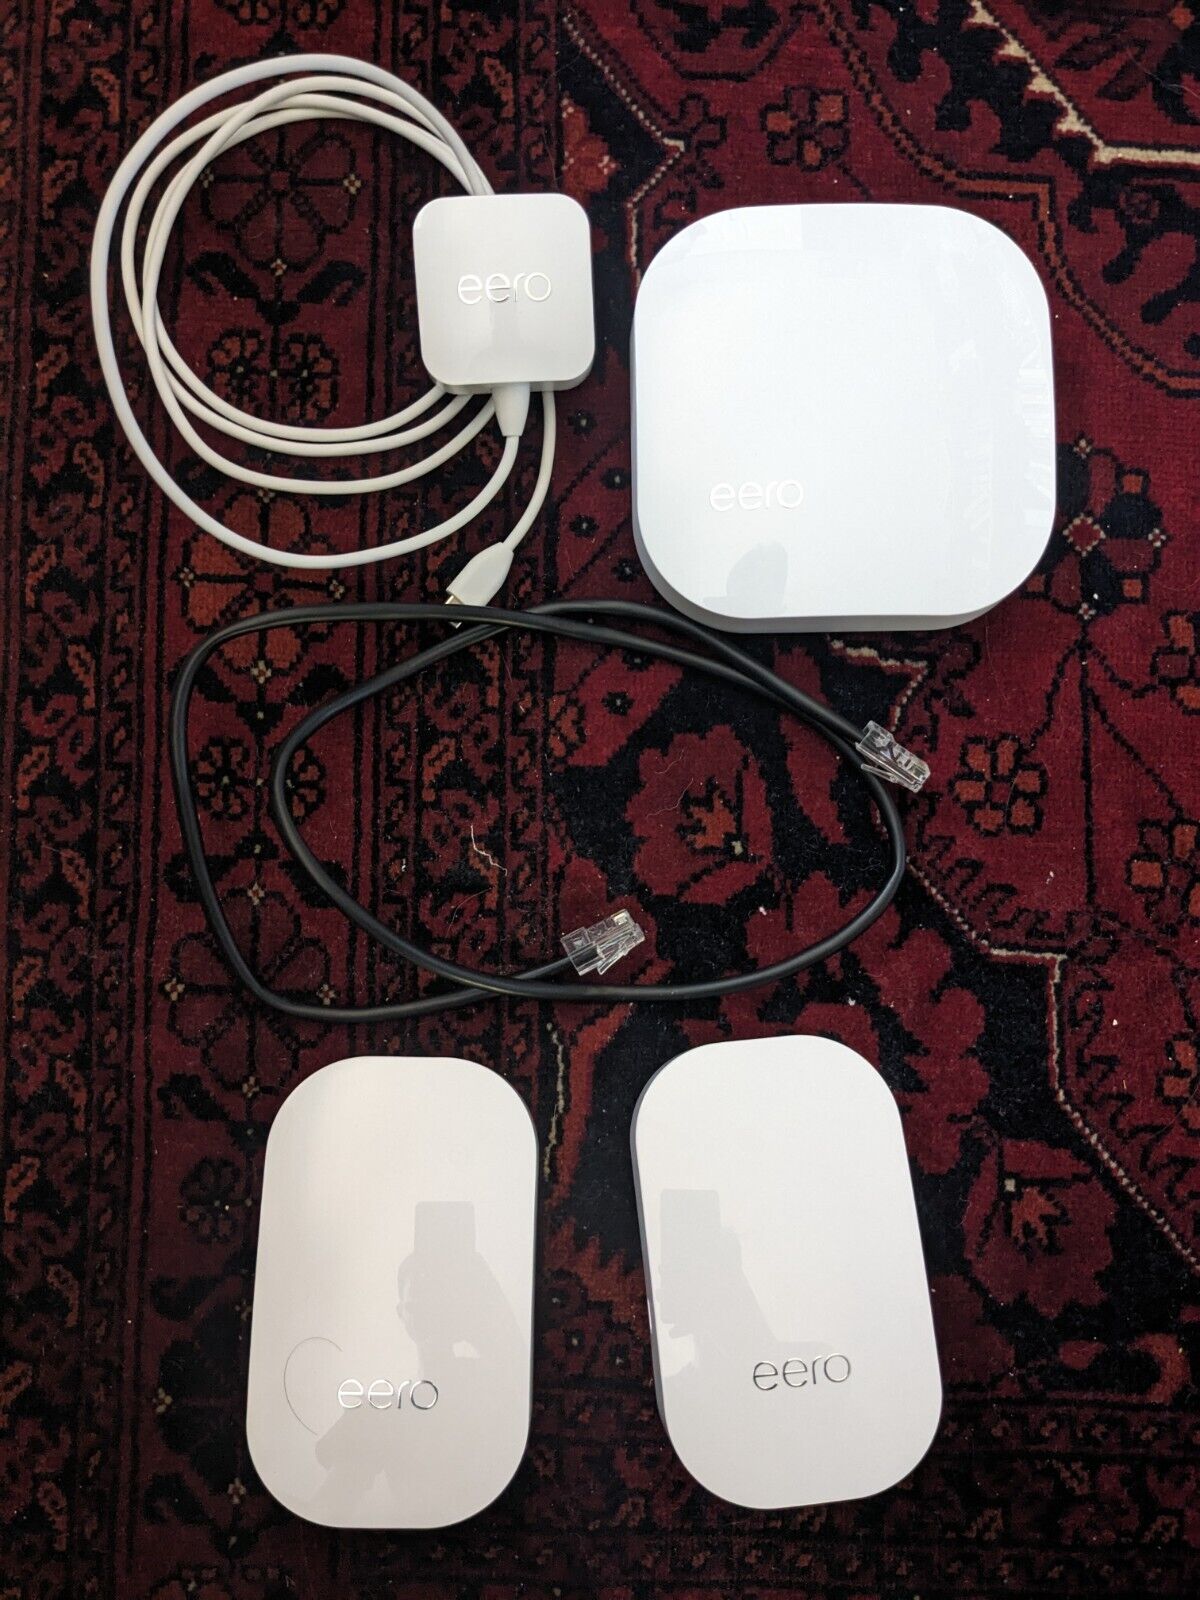 eero Pro Mesh Router (one) and eero Beacon mesh WiFi range extender (two)- White